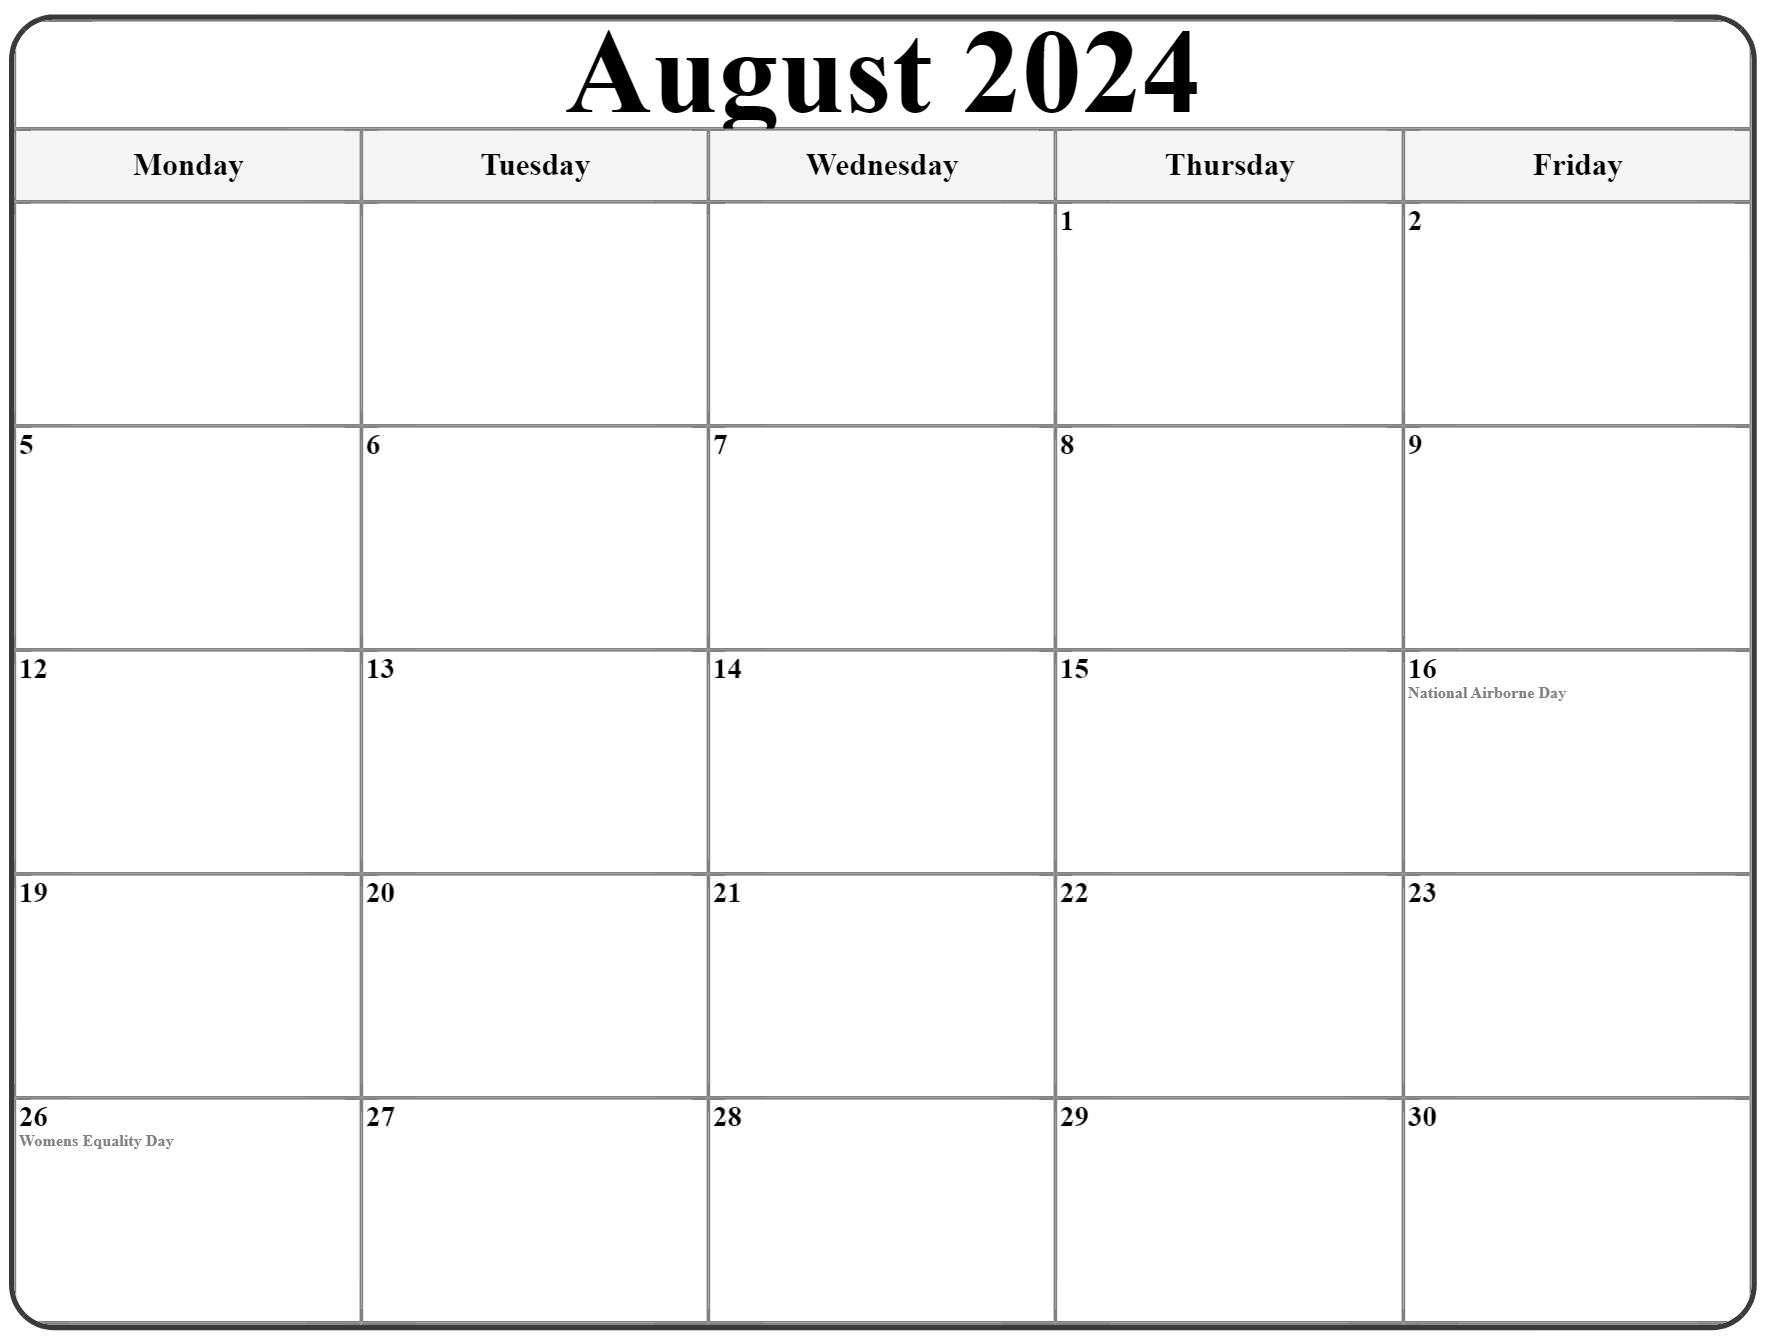 August 2024 Monday Calendar | Monday to Sunday